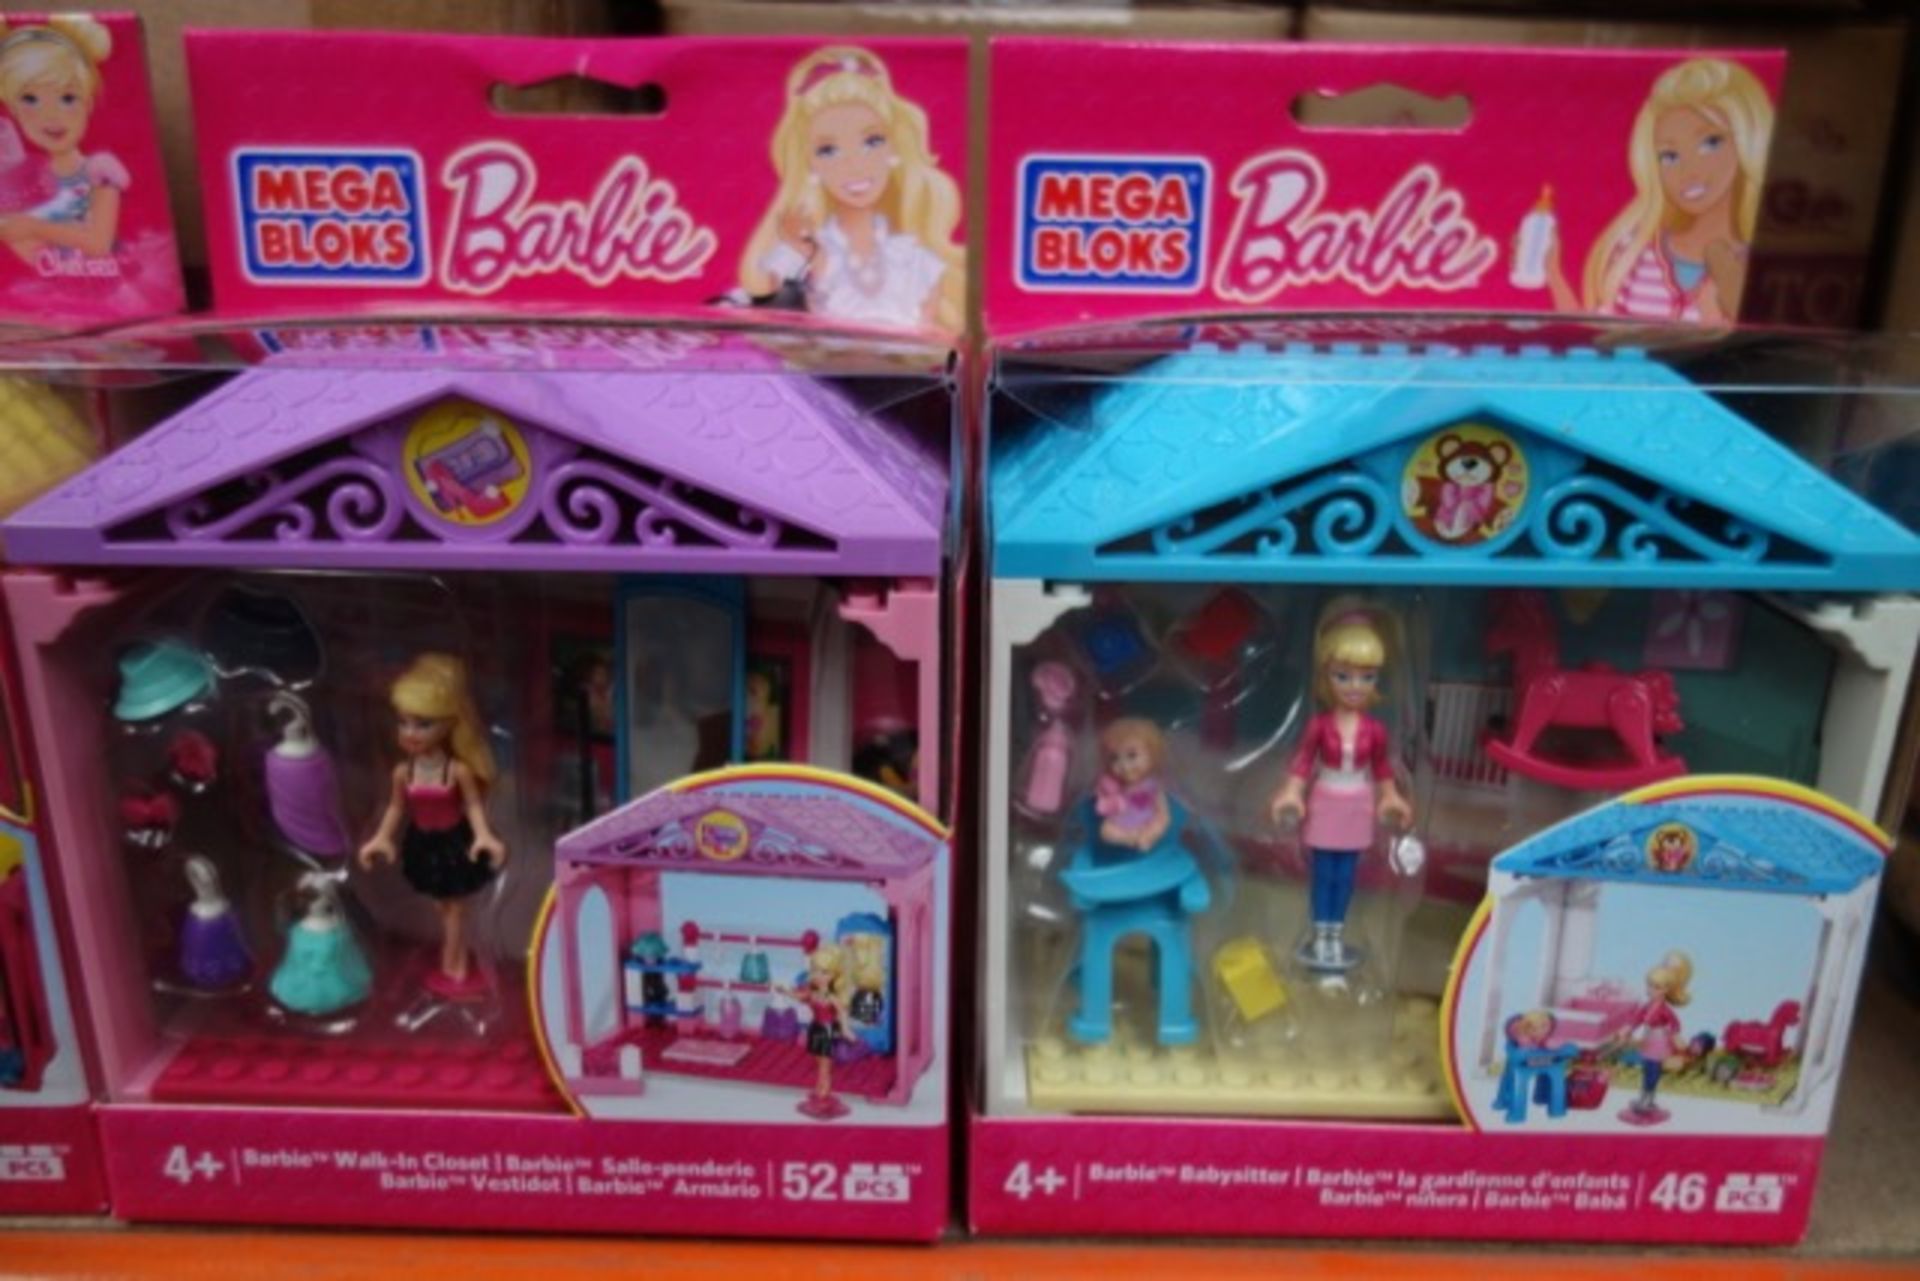 18 x Mega Bloks Barbie Rooms To Build Set's. Includes 4 x Barbie Babysitter 46 piece play set's, 4 x - Image 3 of 3